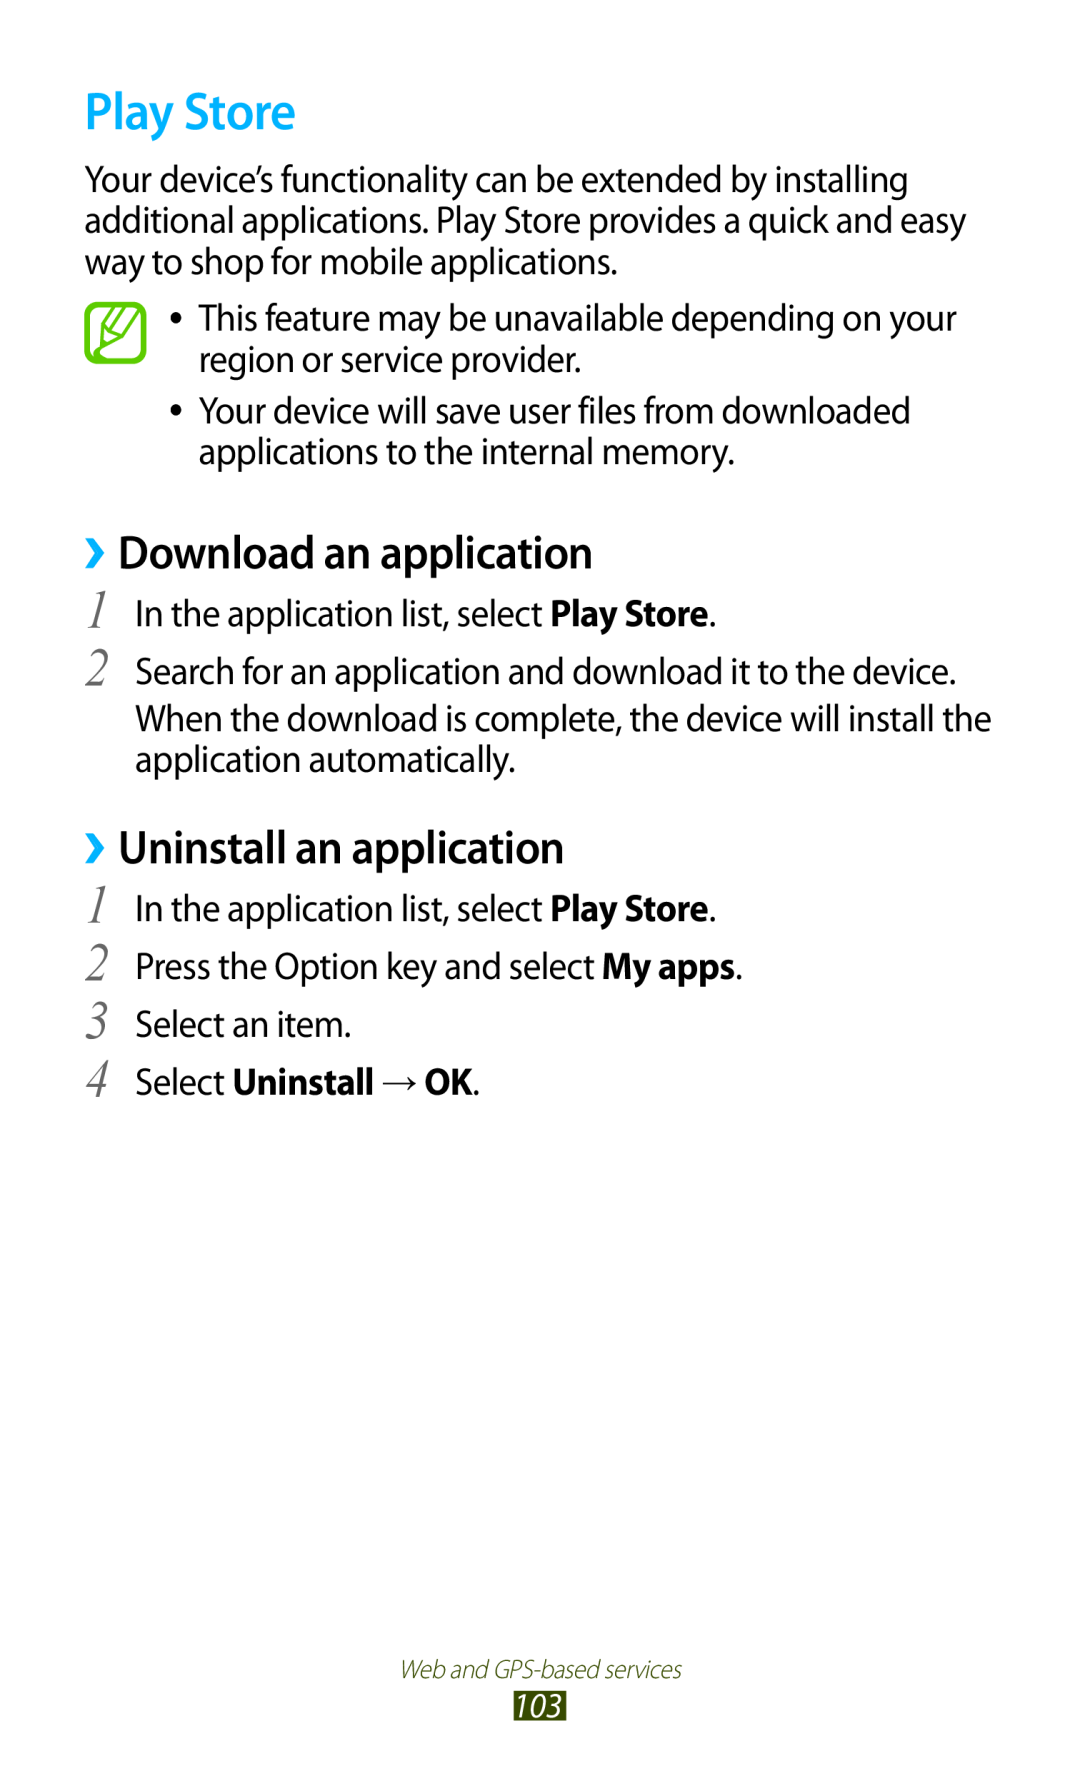 Samsung GT-S7560UWAAMN manual Play Store, ››Download an application, ››Uninstall an application, Select Uninstall → OK 